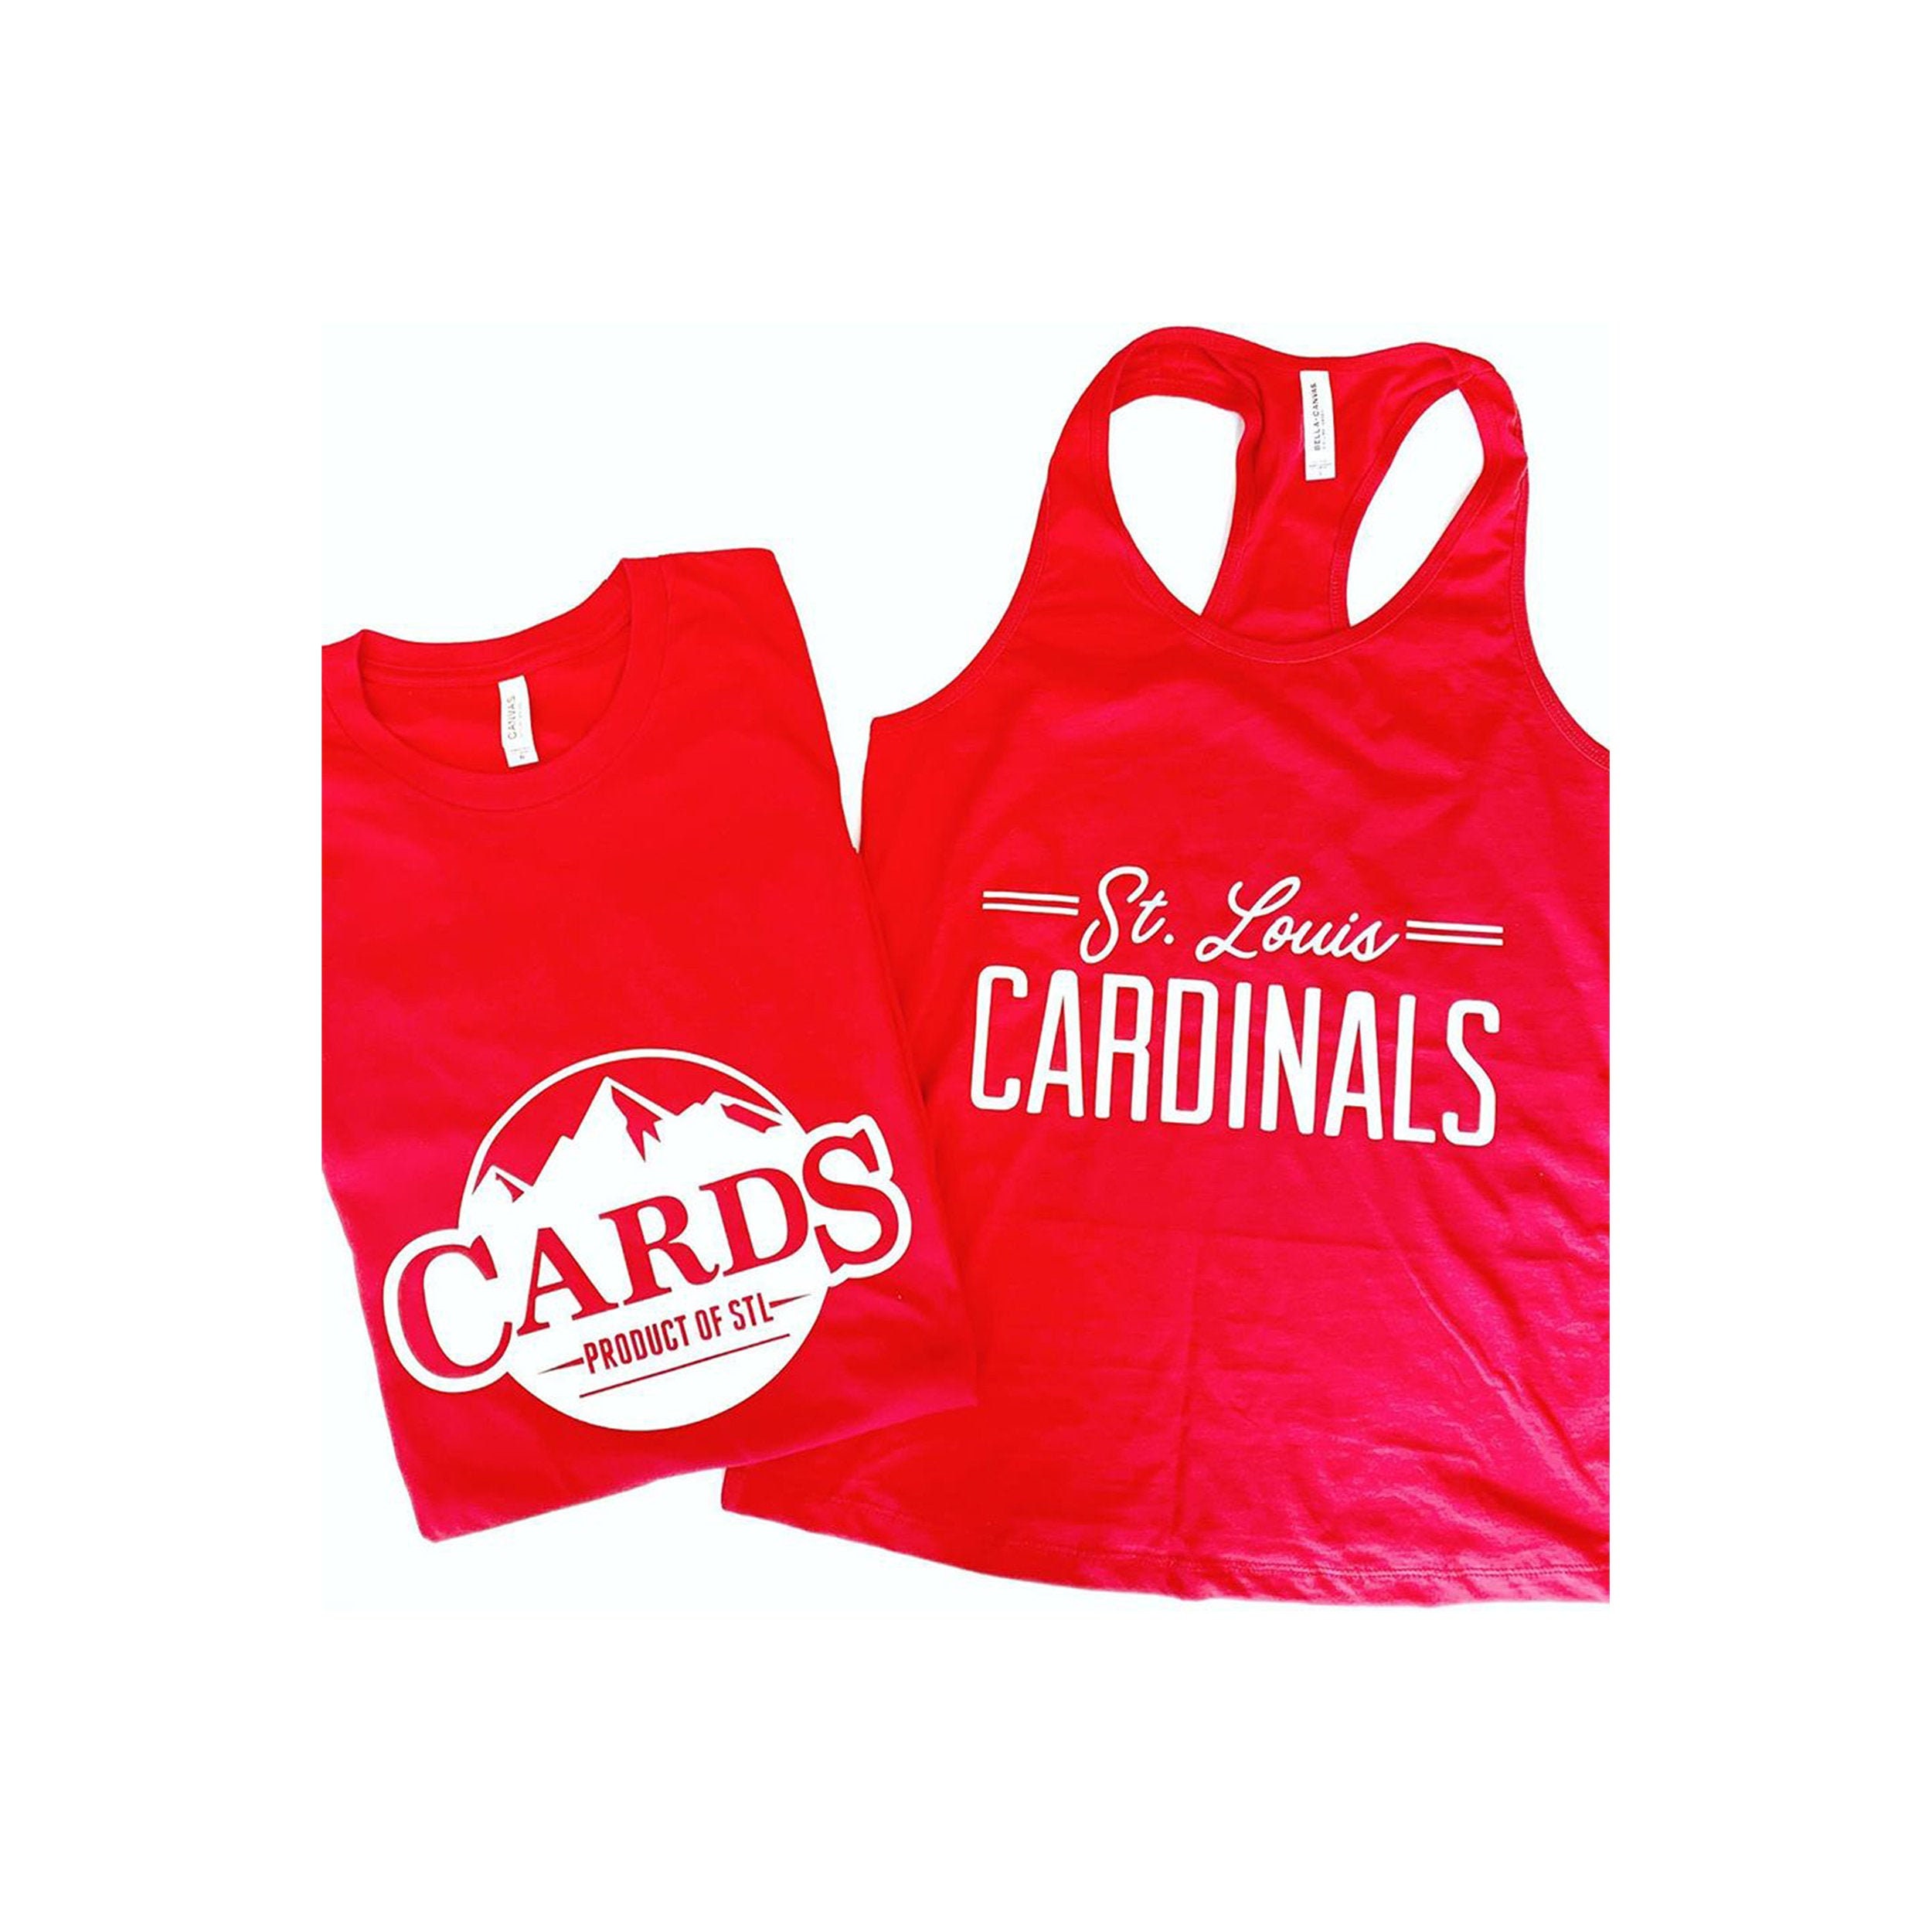 st louis cardinals spring training shirts